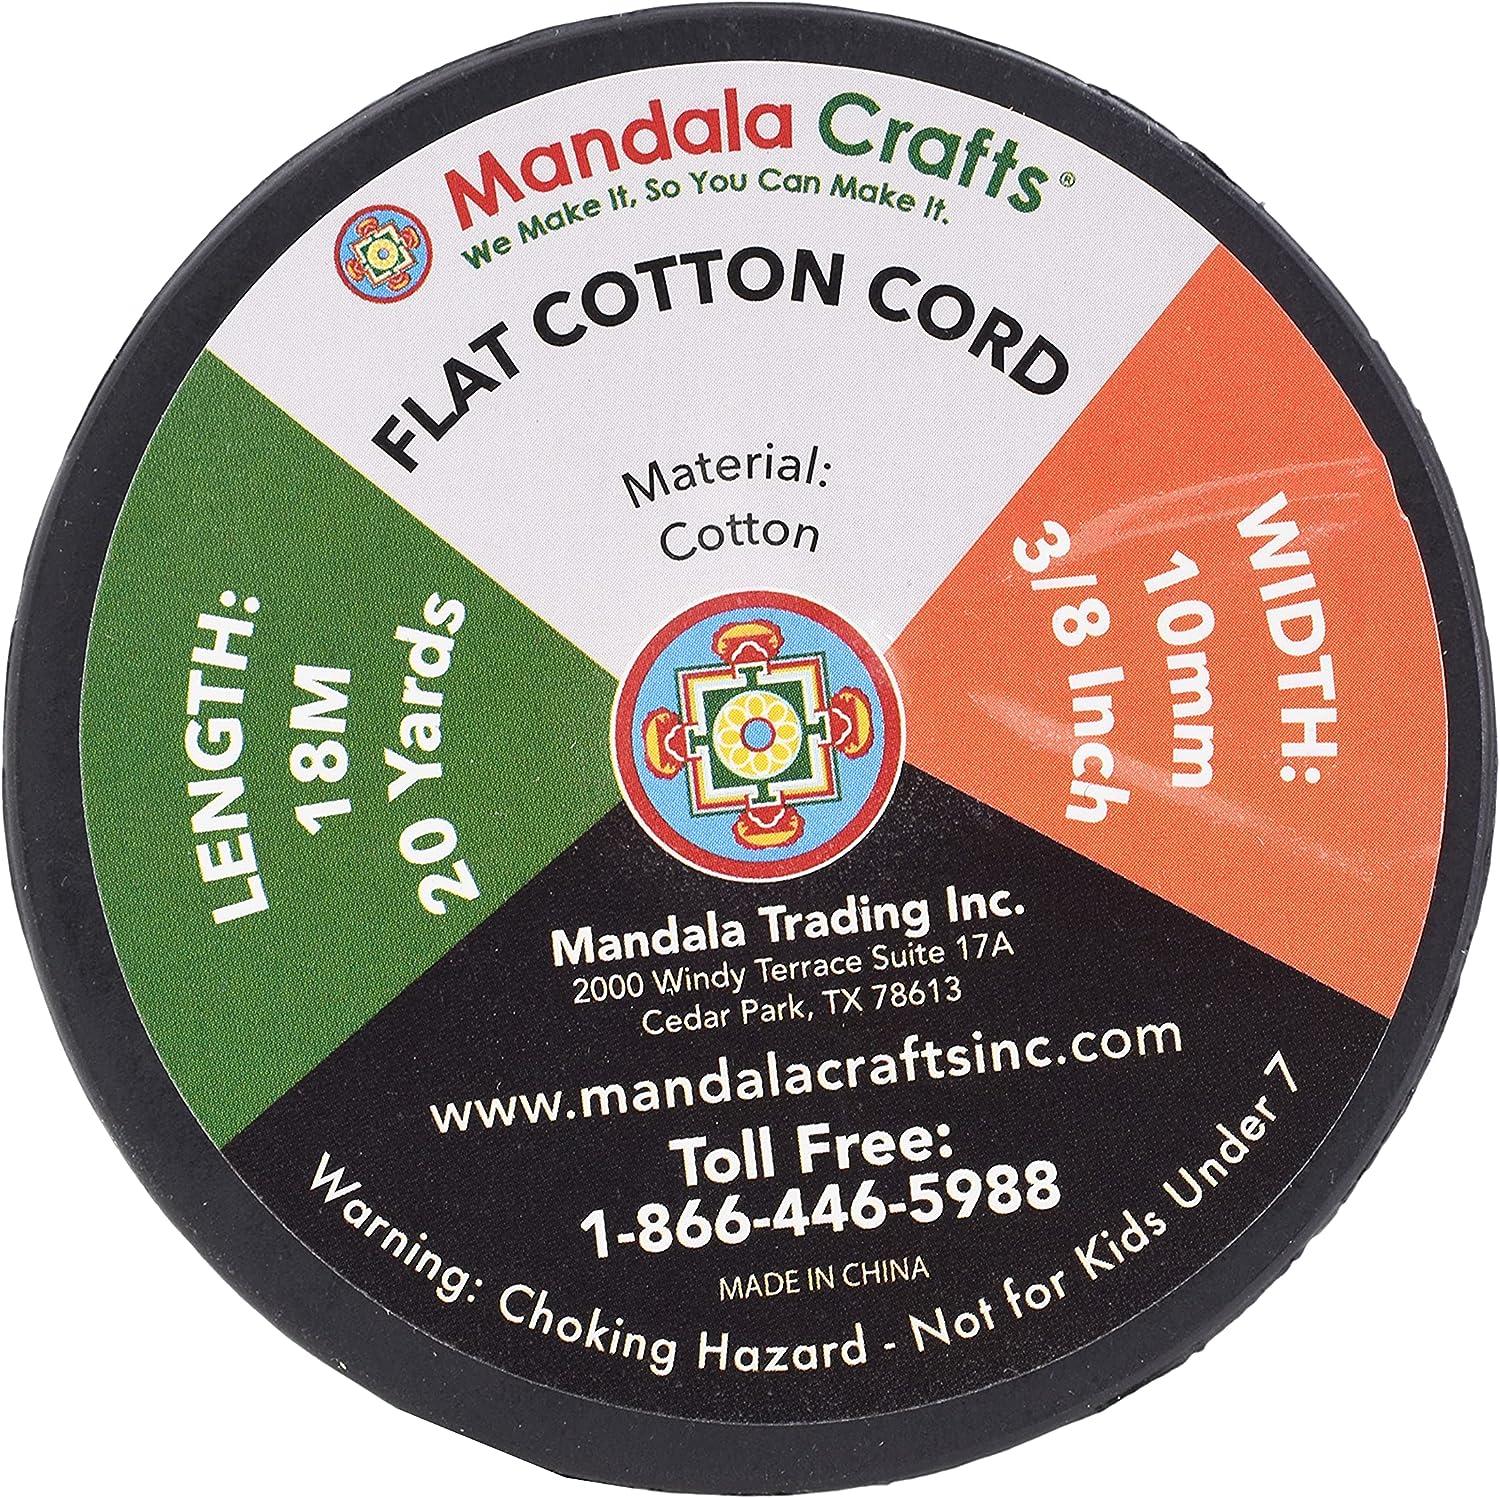 Mandala Crafts Black Flat Drawstring Cord Drawstring Replacement, 3/8 Inch  20 YDs Black Soft Drawstring Cotton Draw Cord Hoodie Sweatpants Drawcord  Replacement Black 3/8 Inch 20 YDs